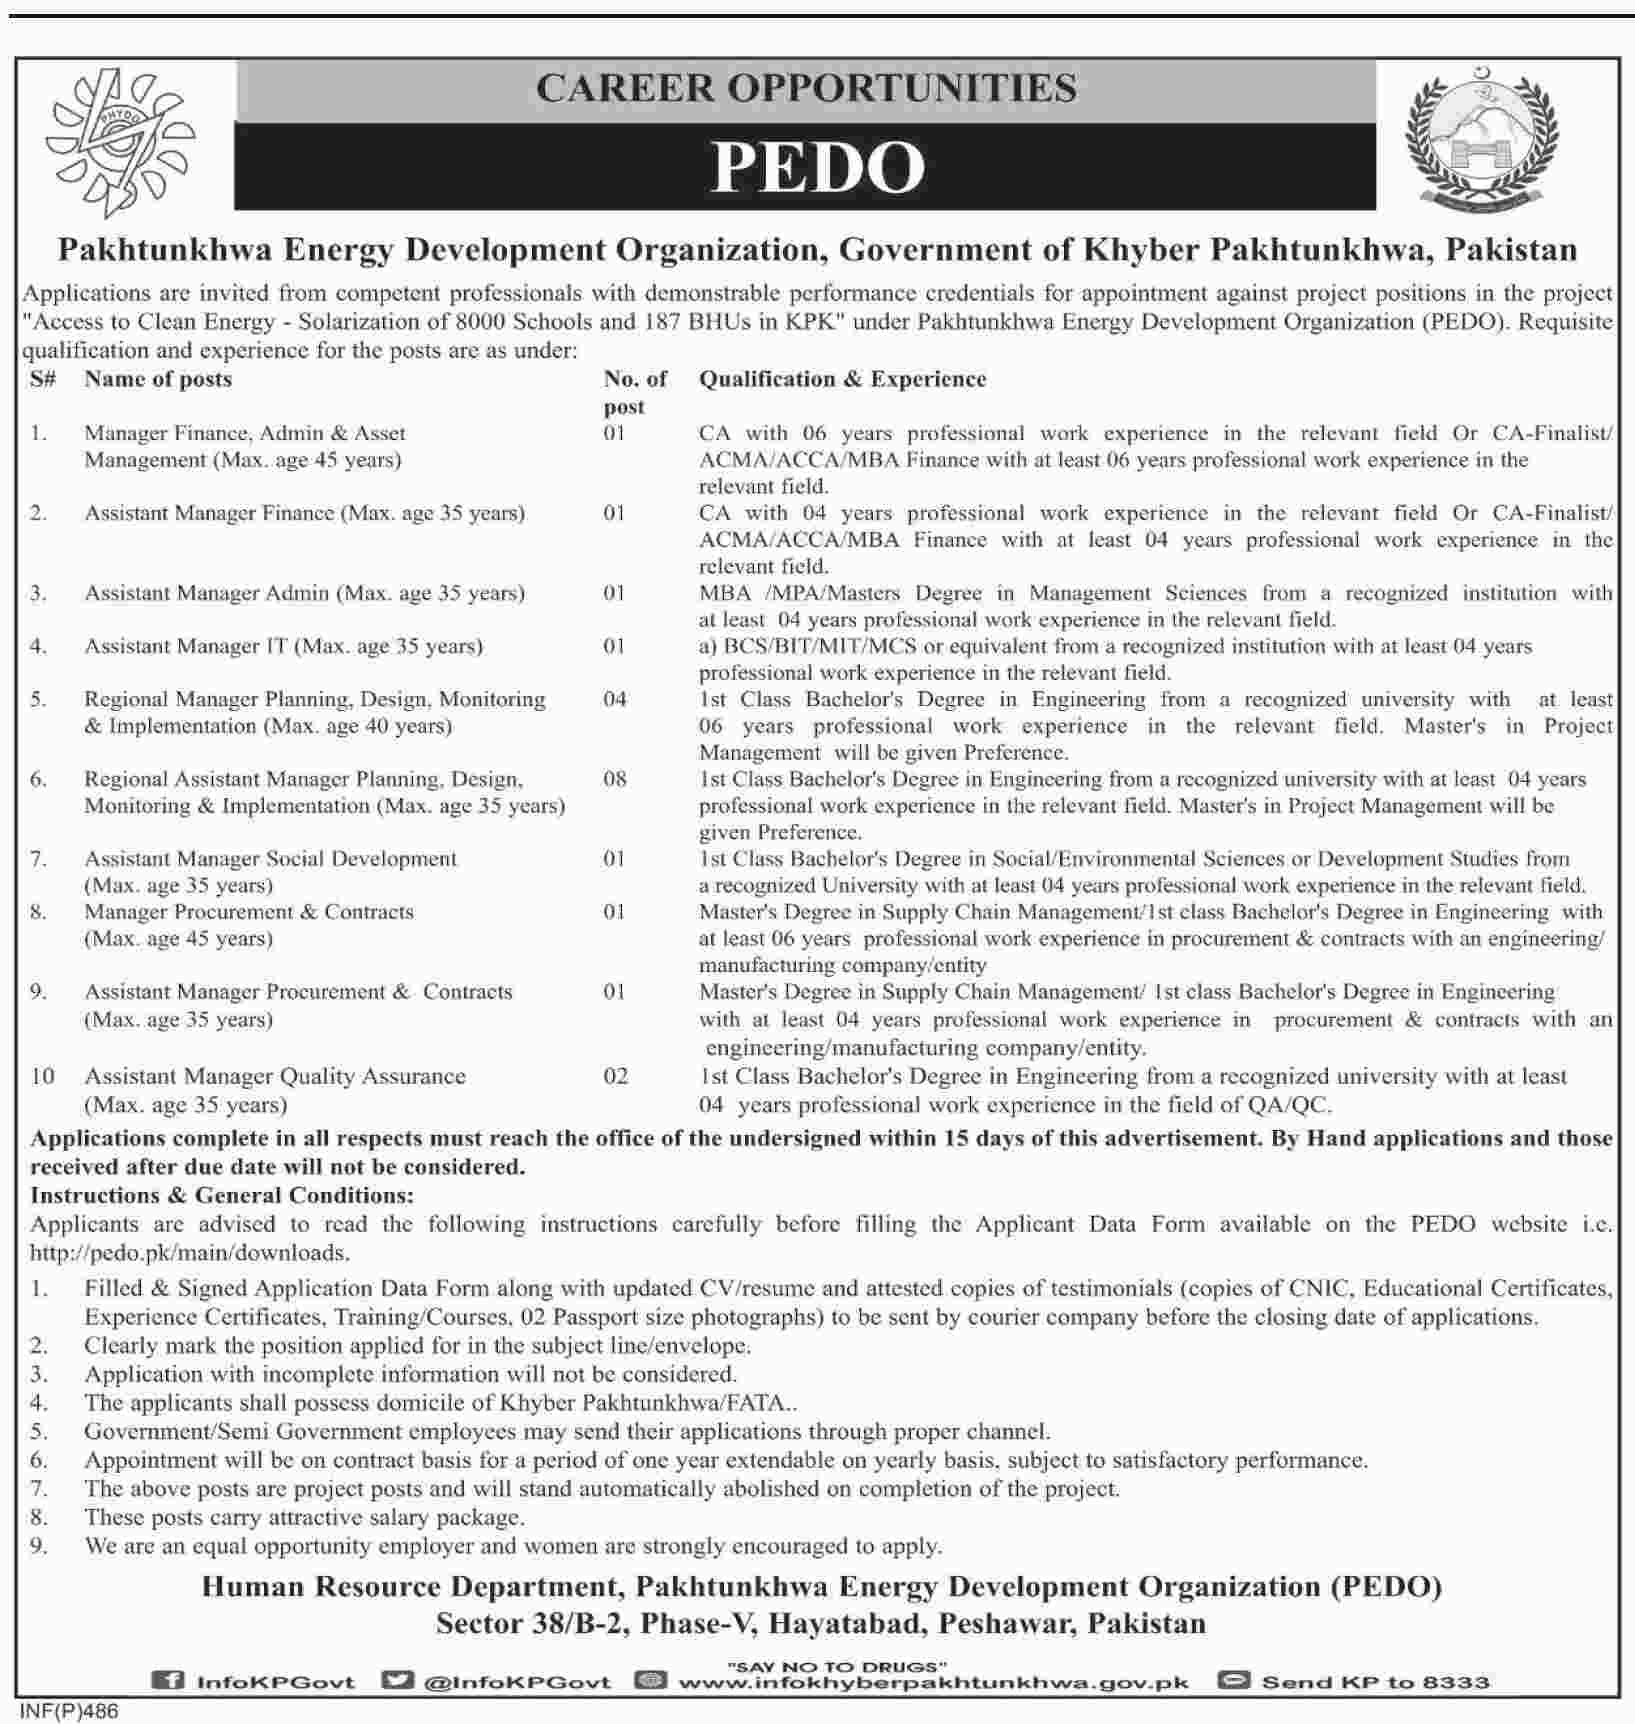 Jobs in Pakhtukhwa Energy Development Organization 28 Jan 2018